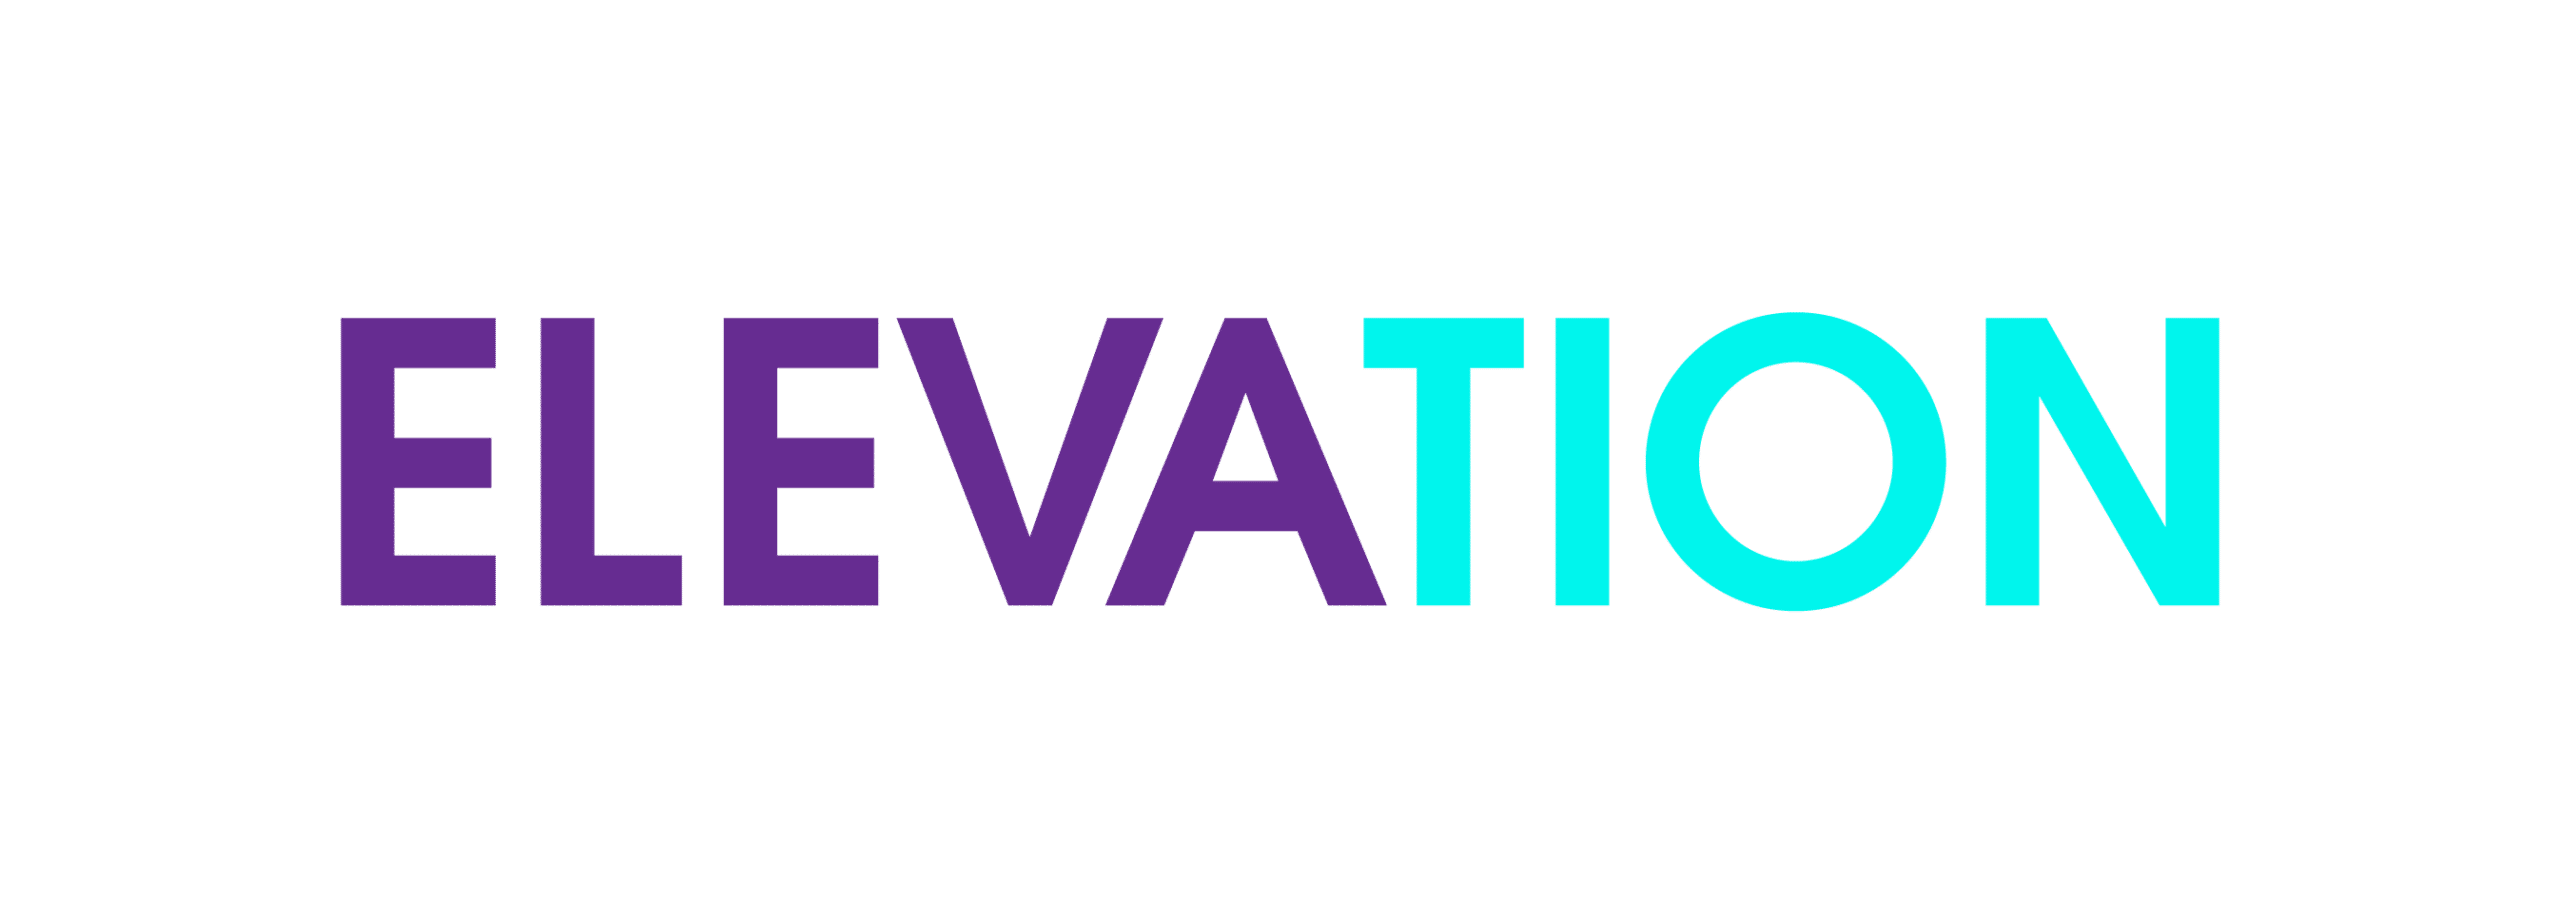 Elevation Web - Nonprofit Website Design